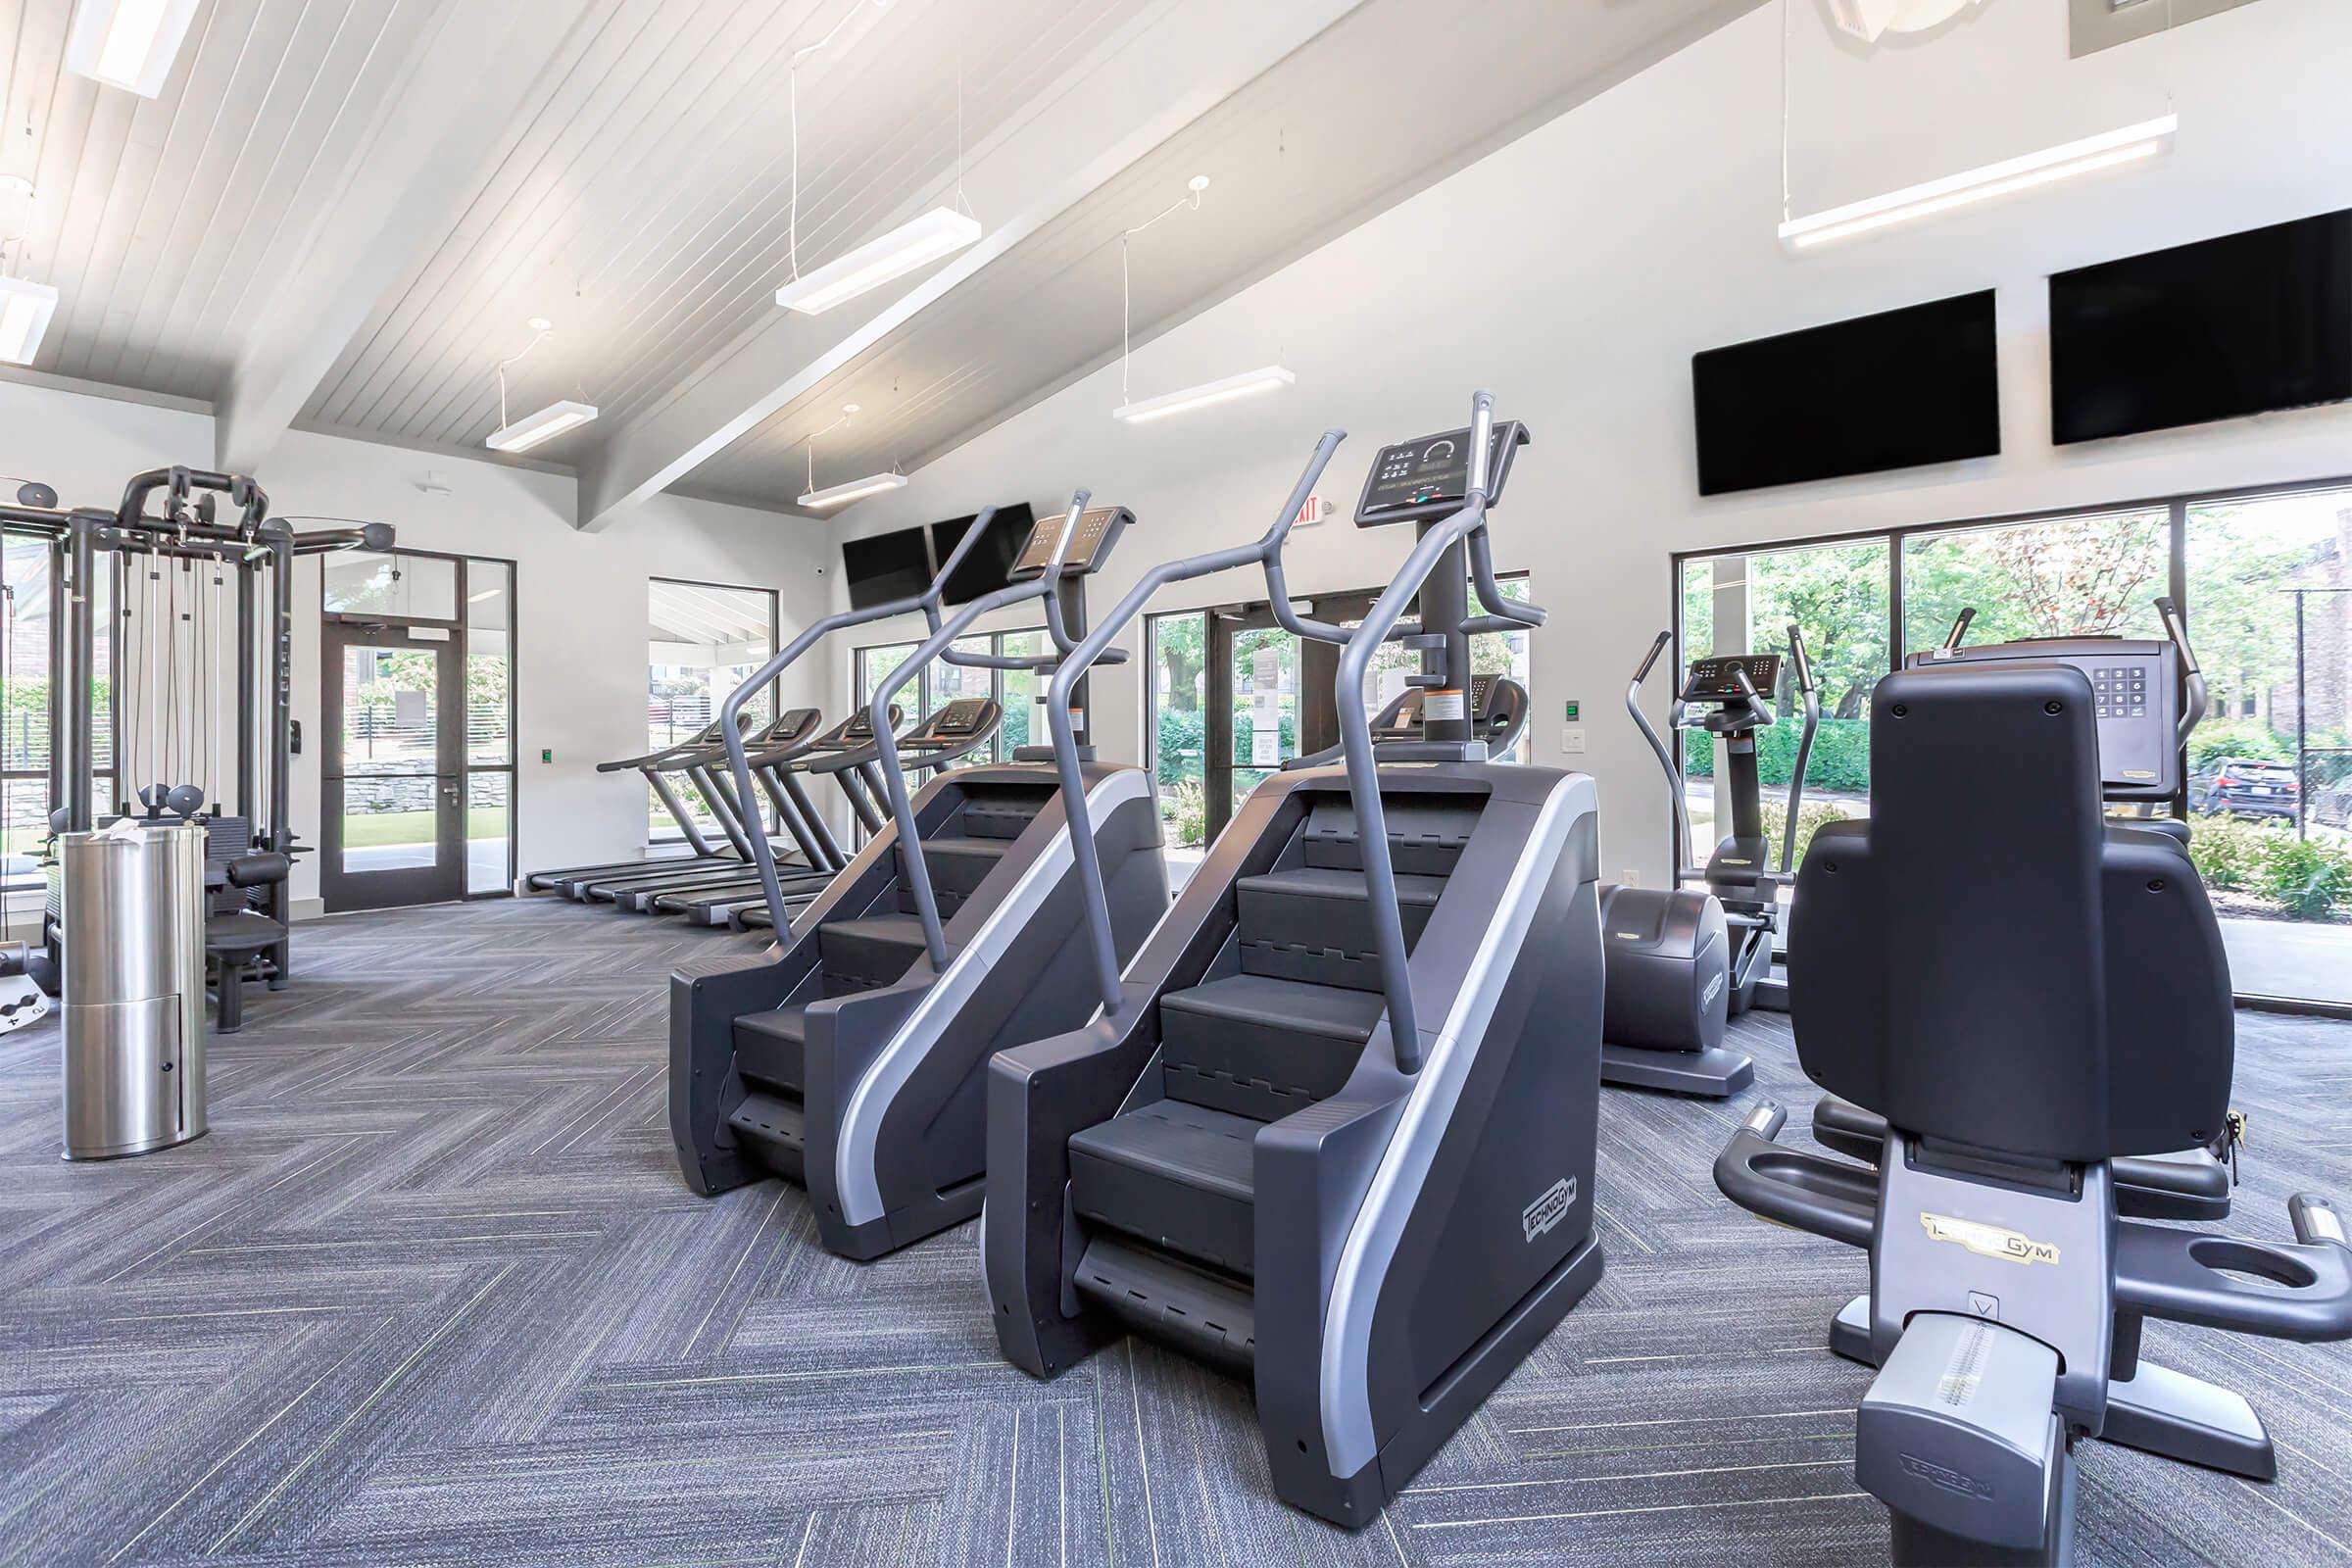 The fitness center at Gazebo Apartments in Nashville TN